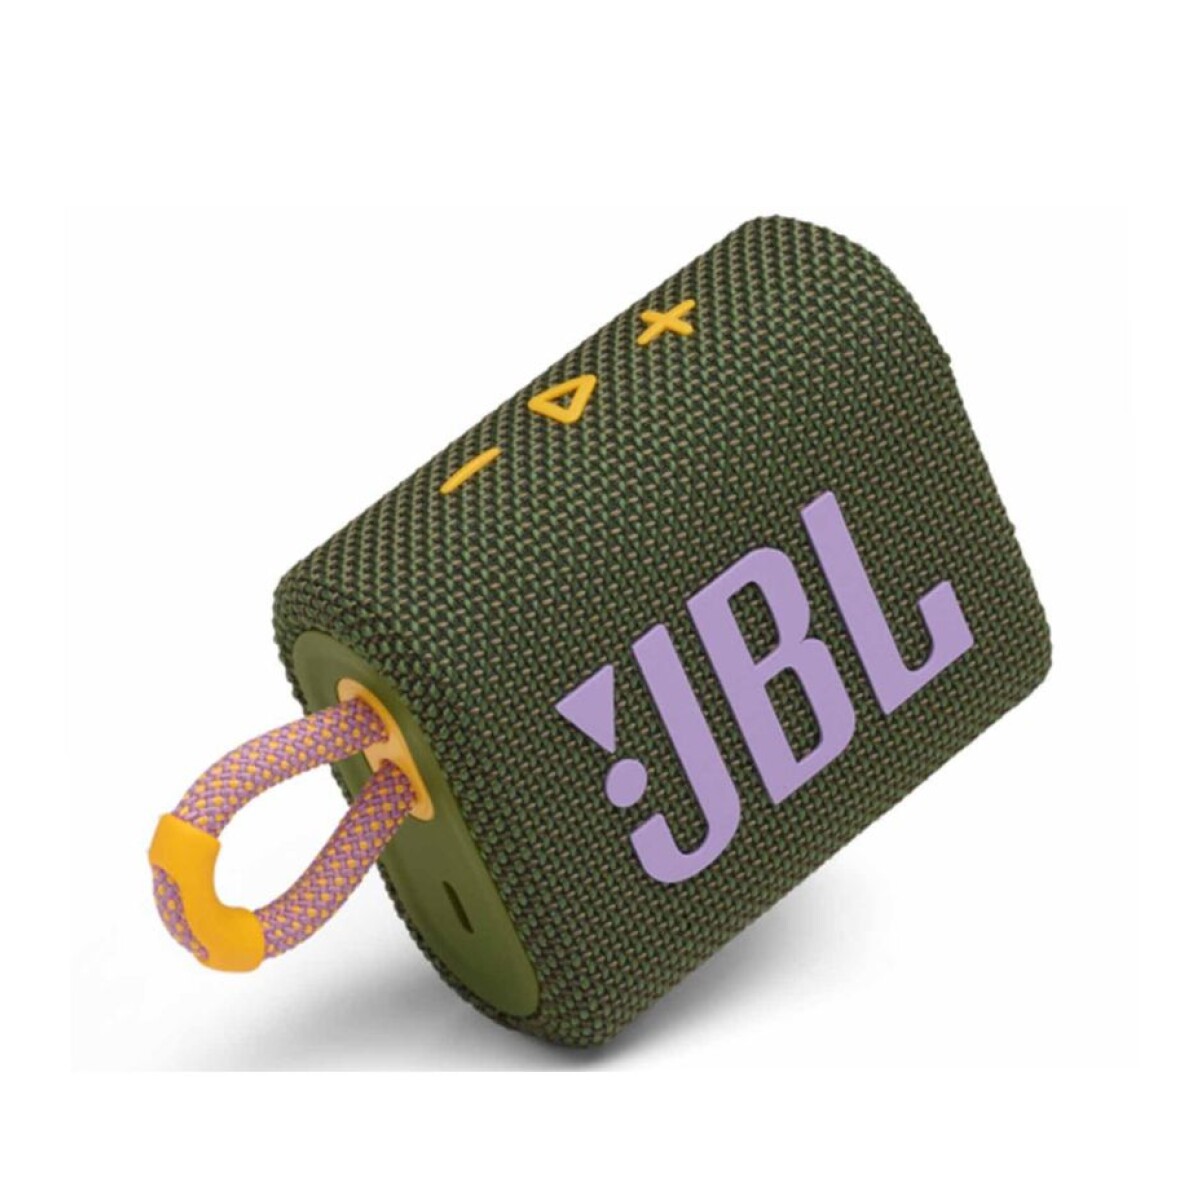 Jbl go 3 parlante portatil waterproof Green